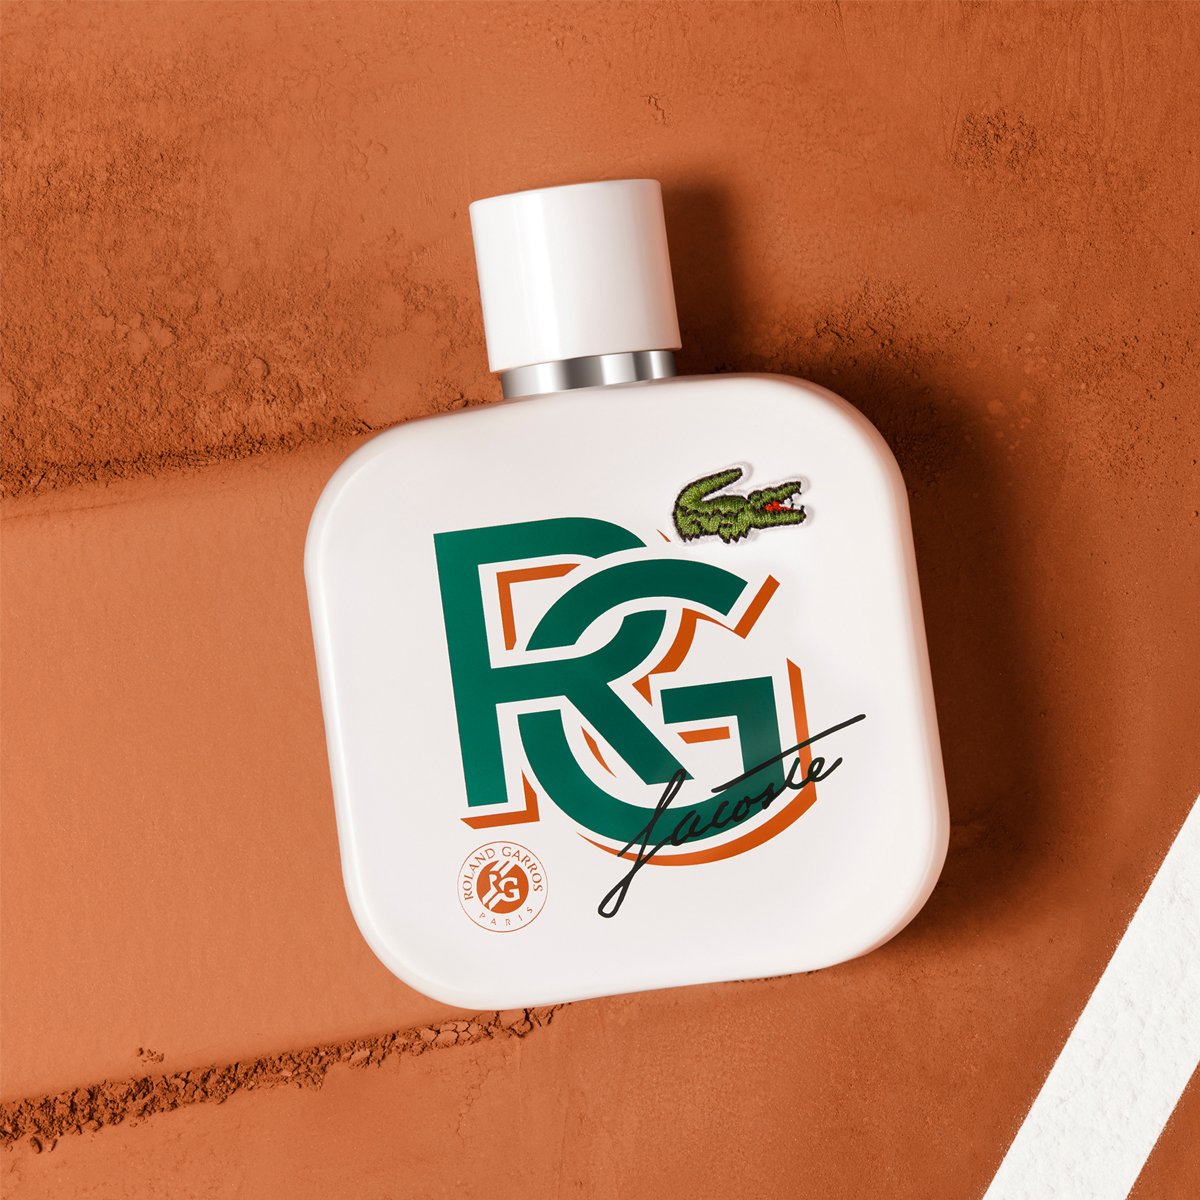 L.12.12. official Roland-Garros fragrance - 100 ml |